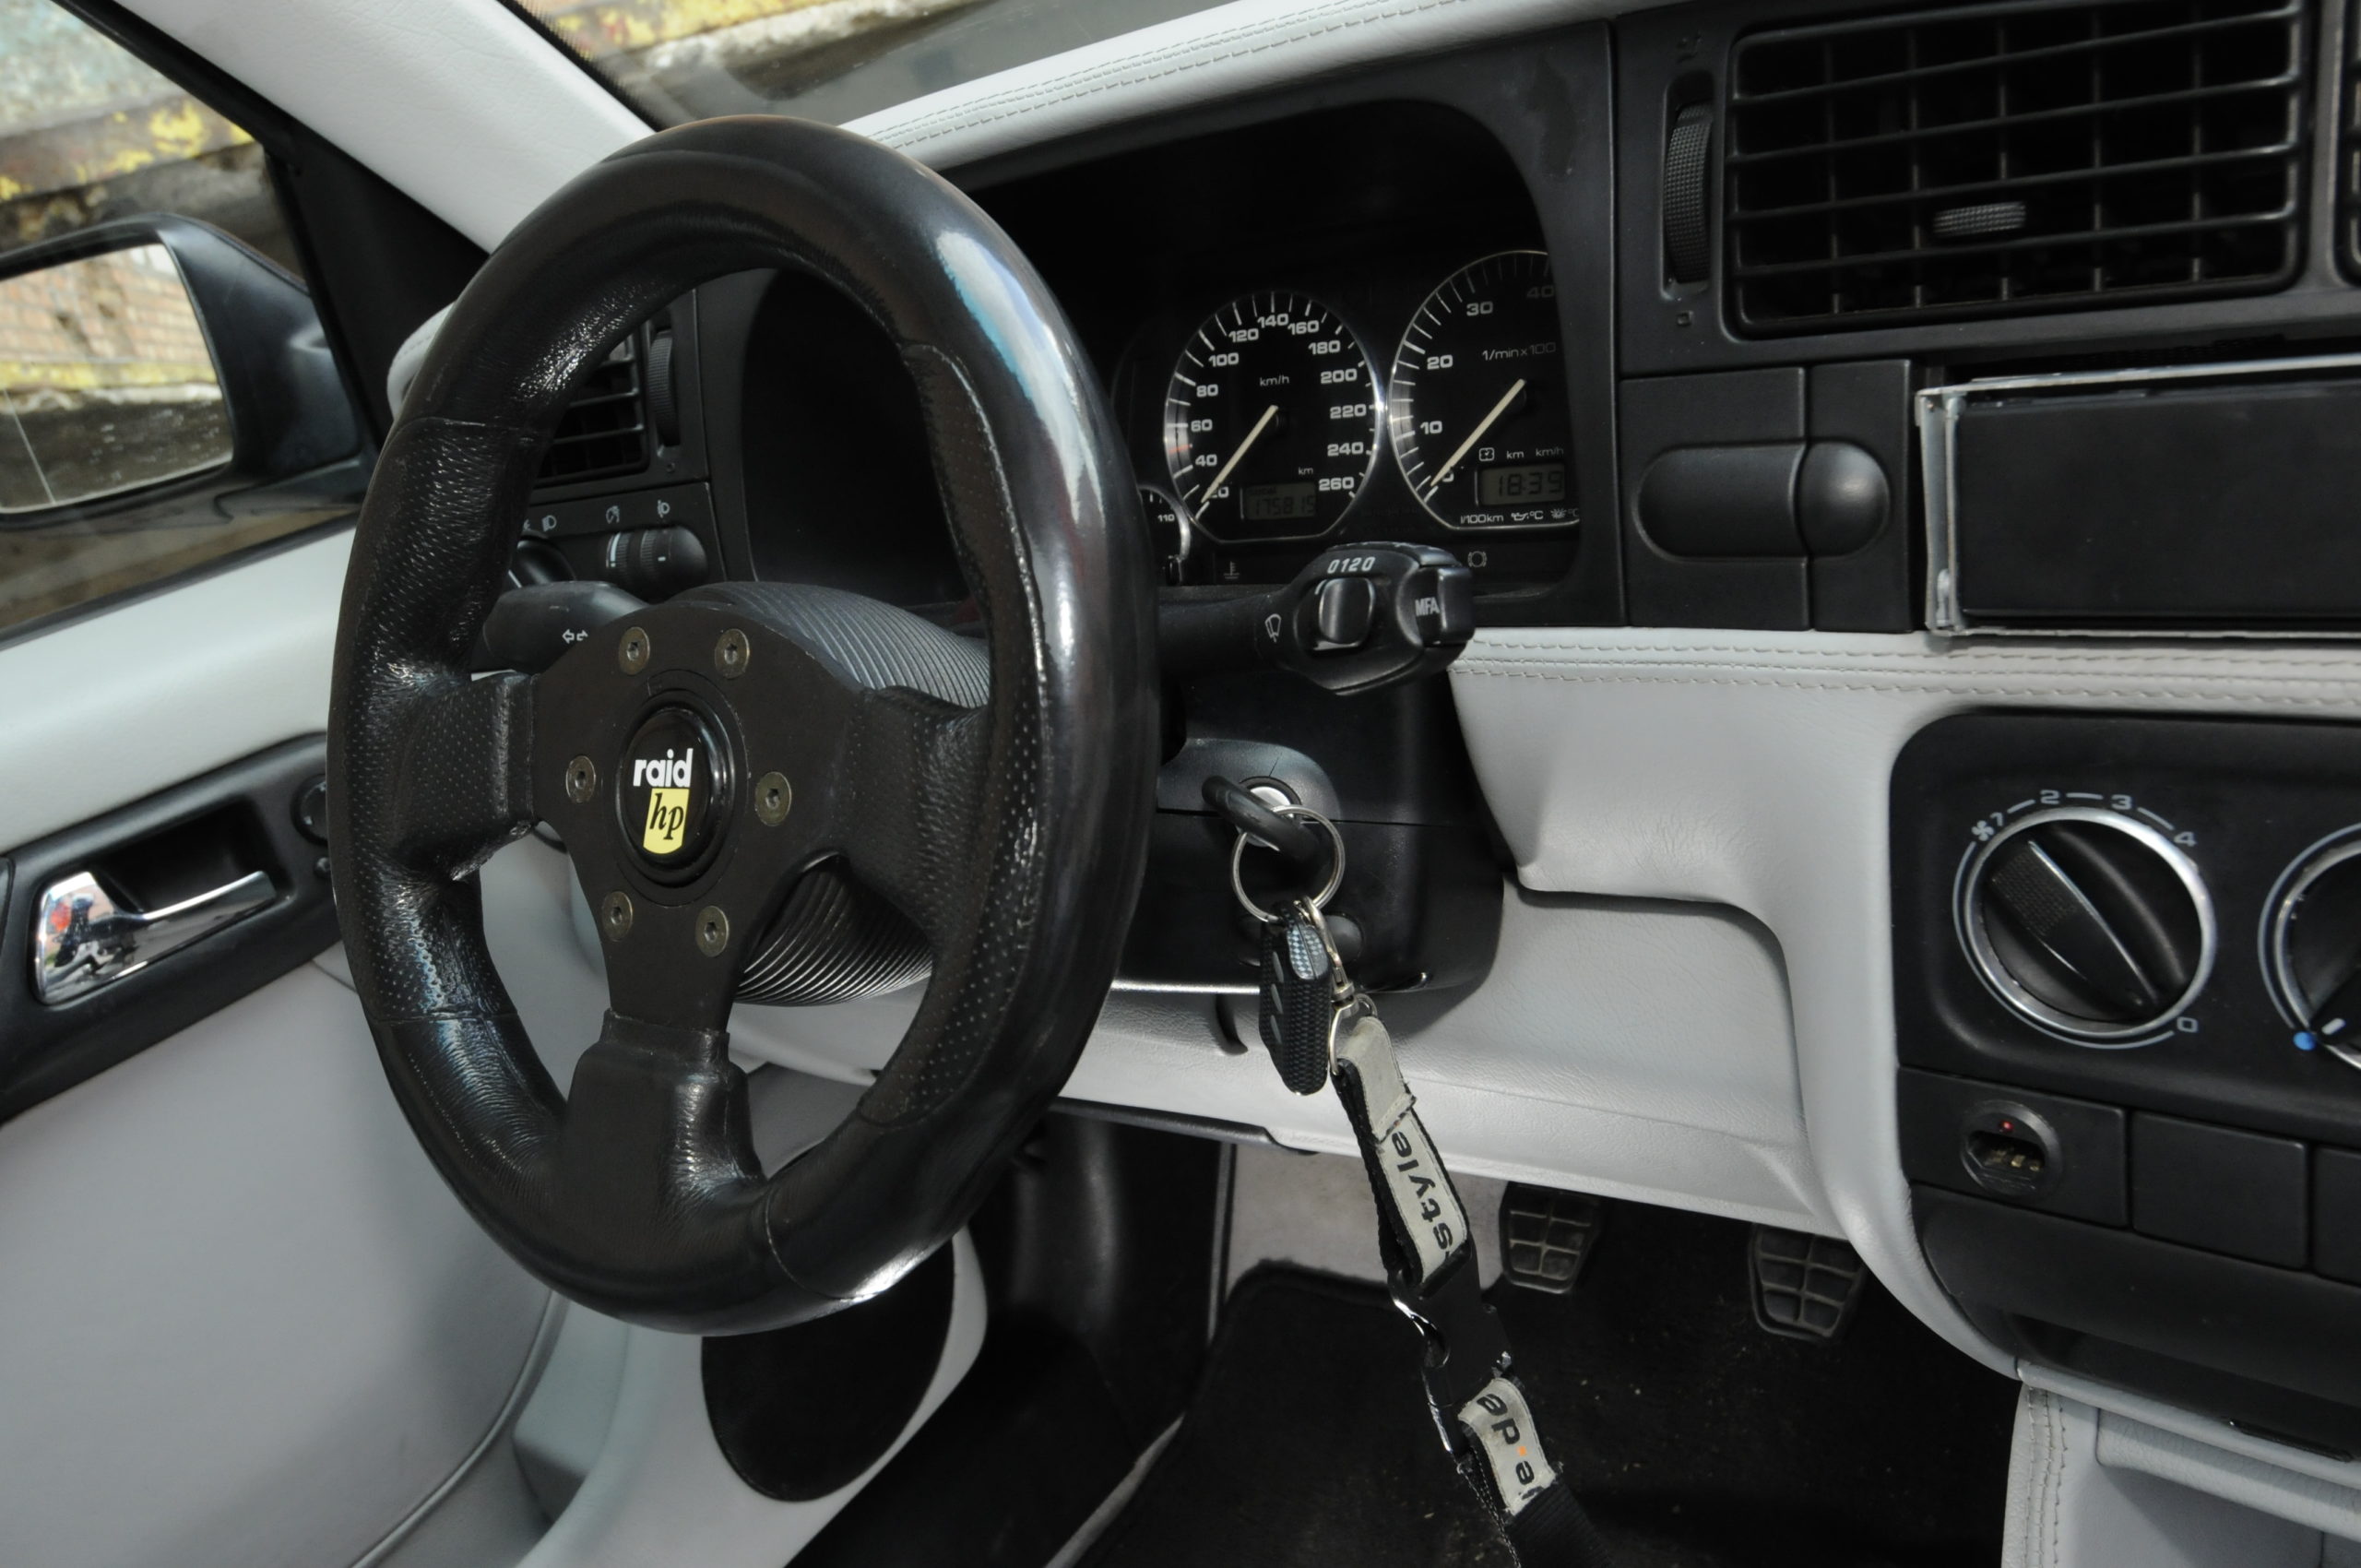 Tuning-VW-Golf-3-VR6-kierownica raid hp